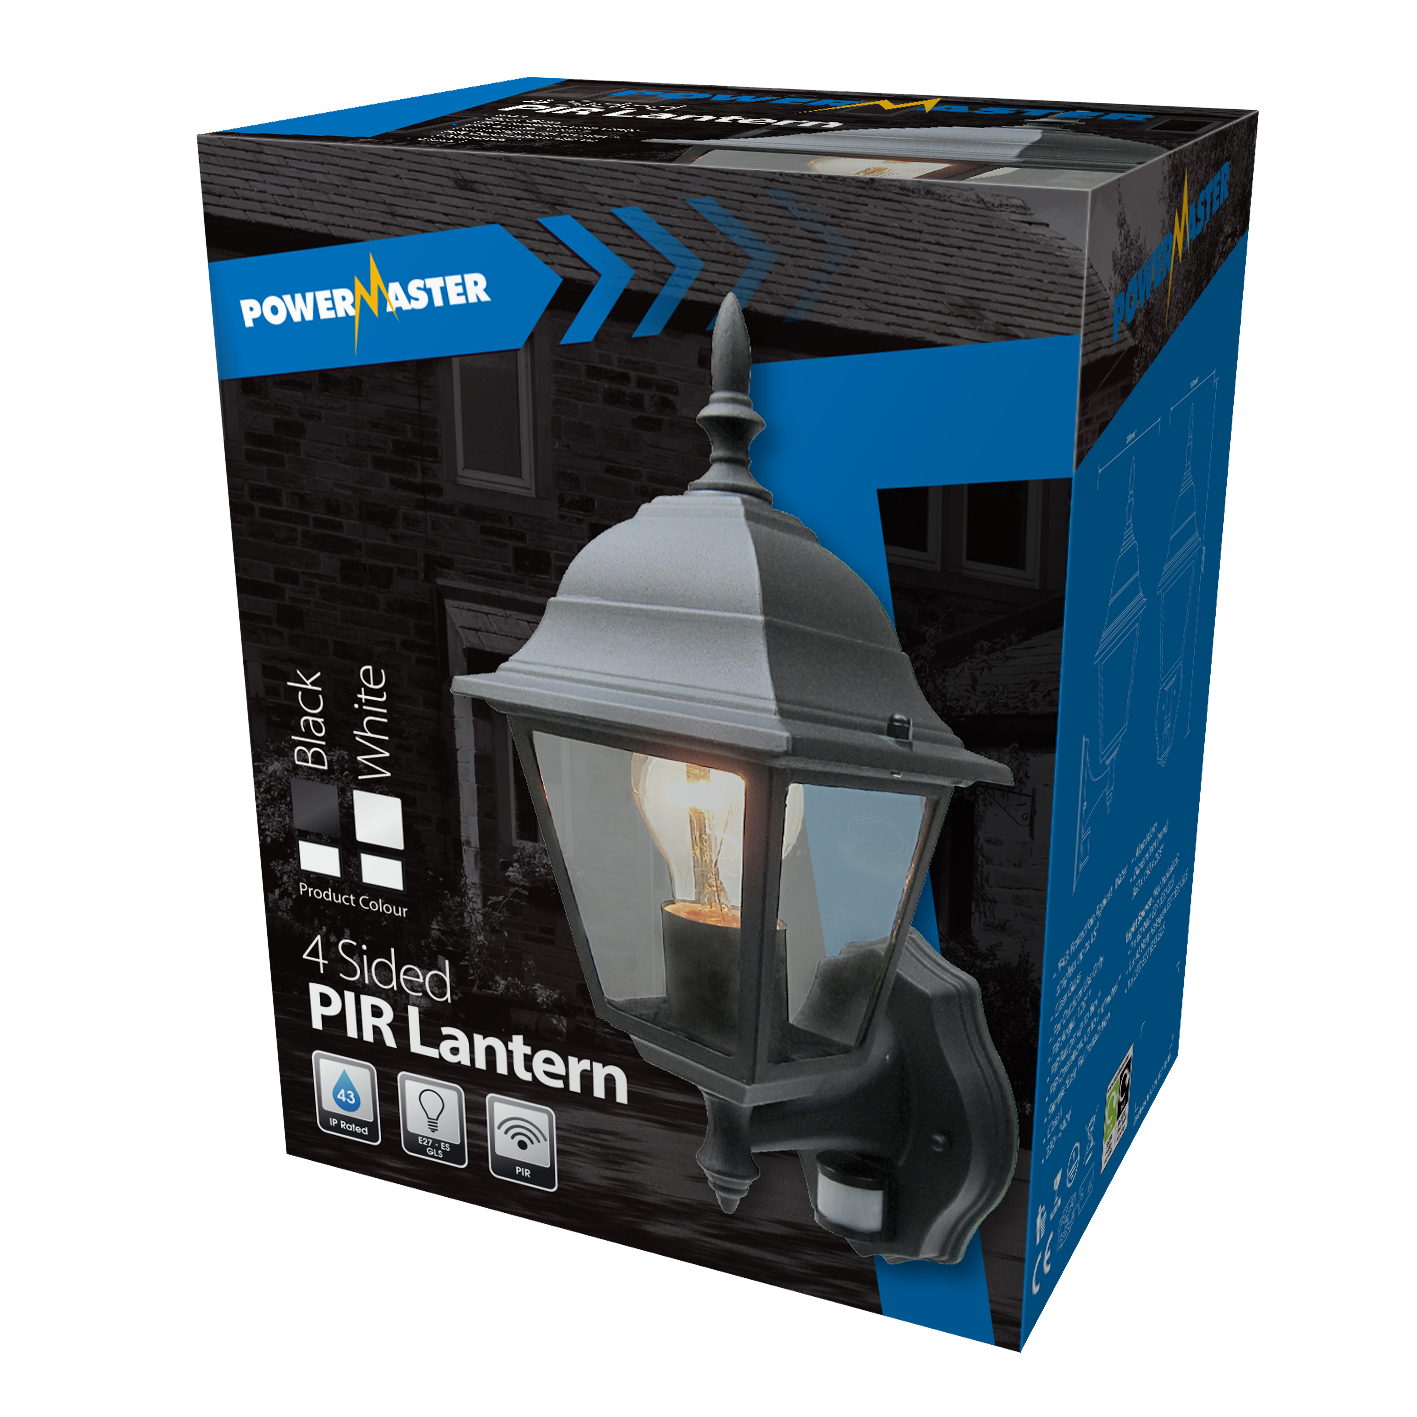 PowerMaster 4 Sided PIR Lantern - Black